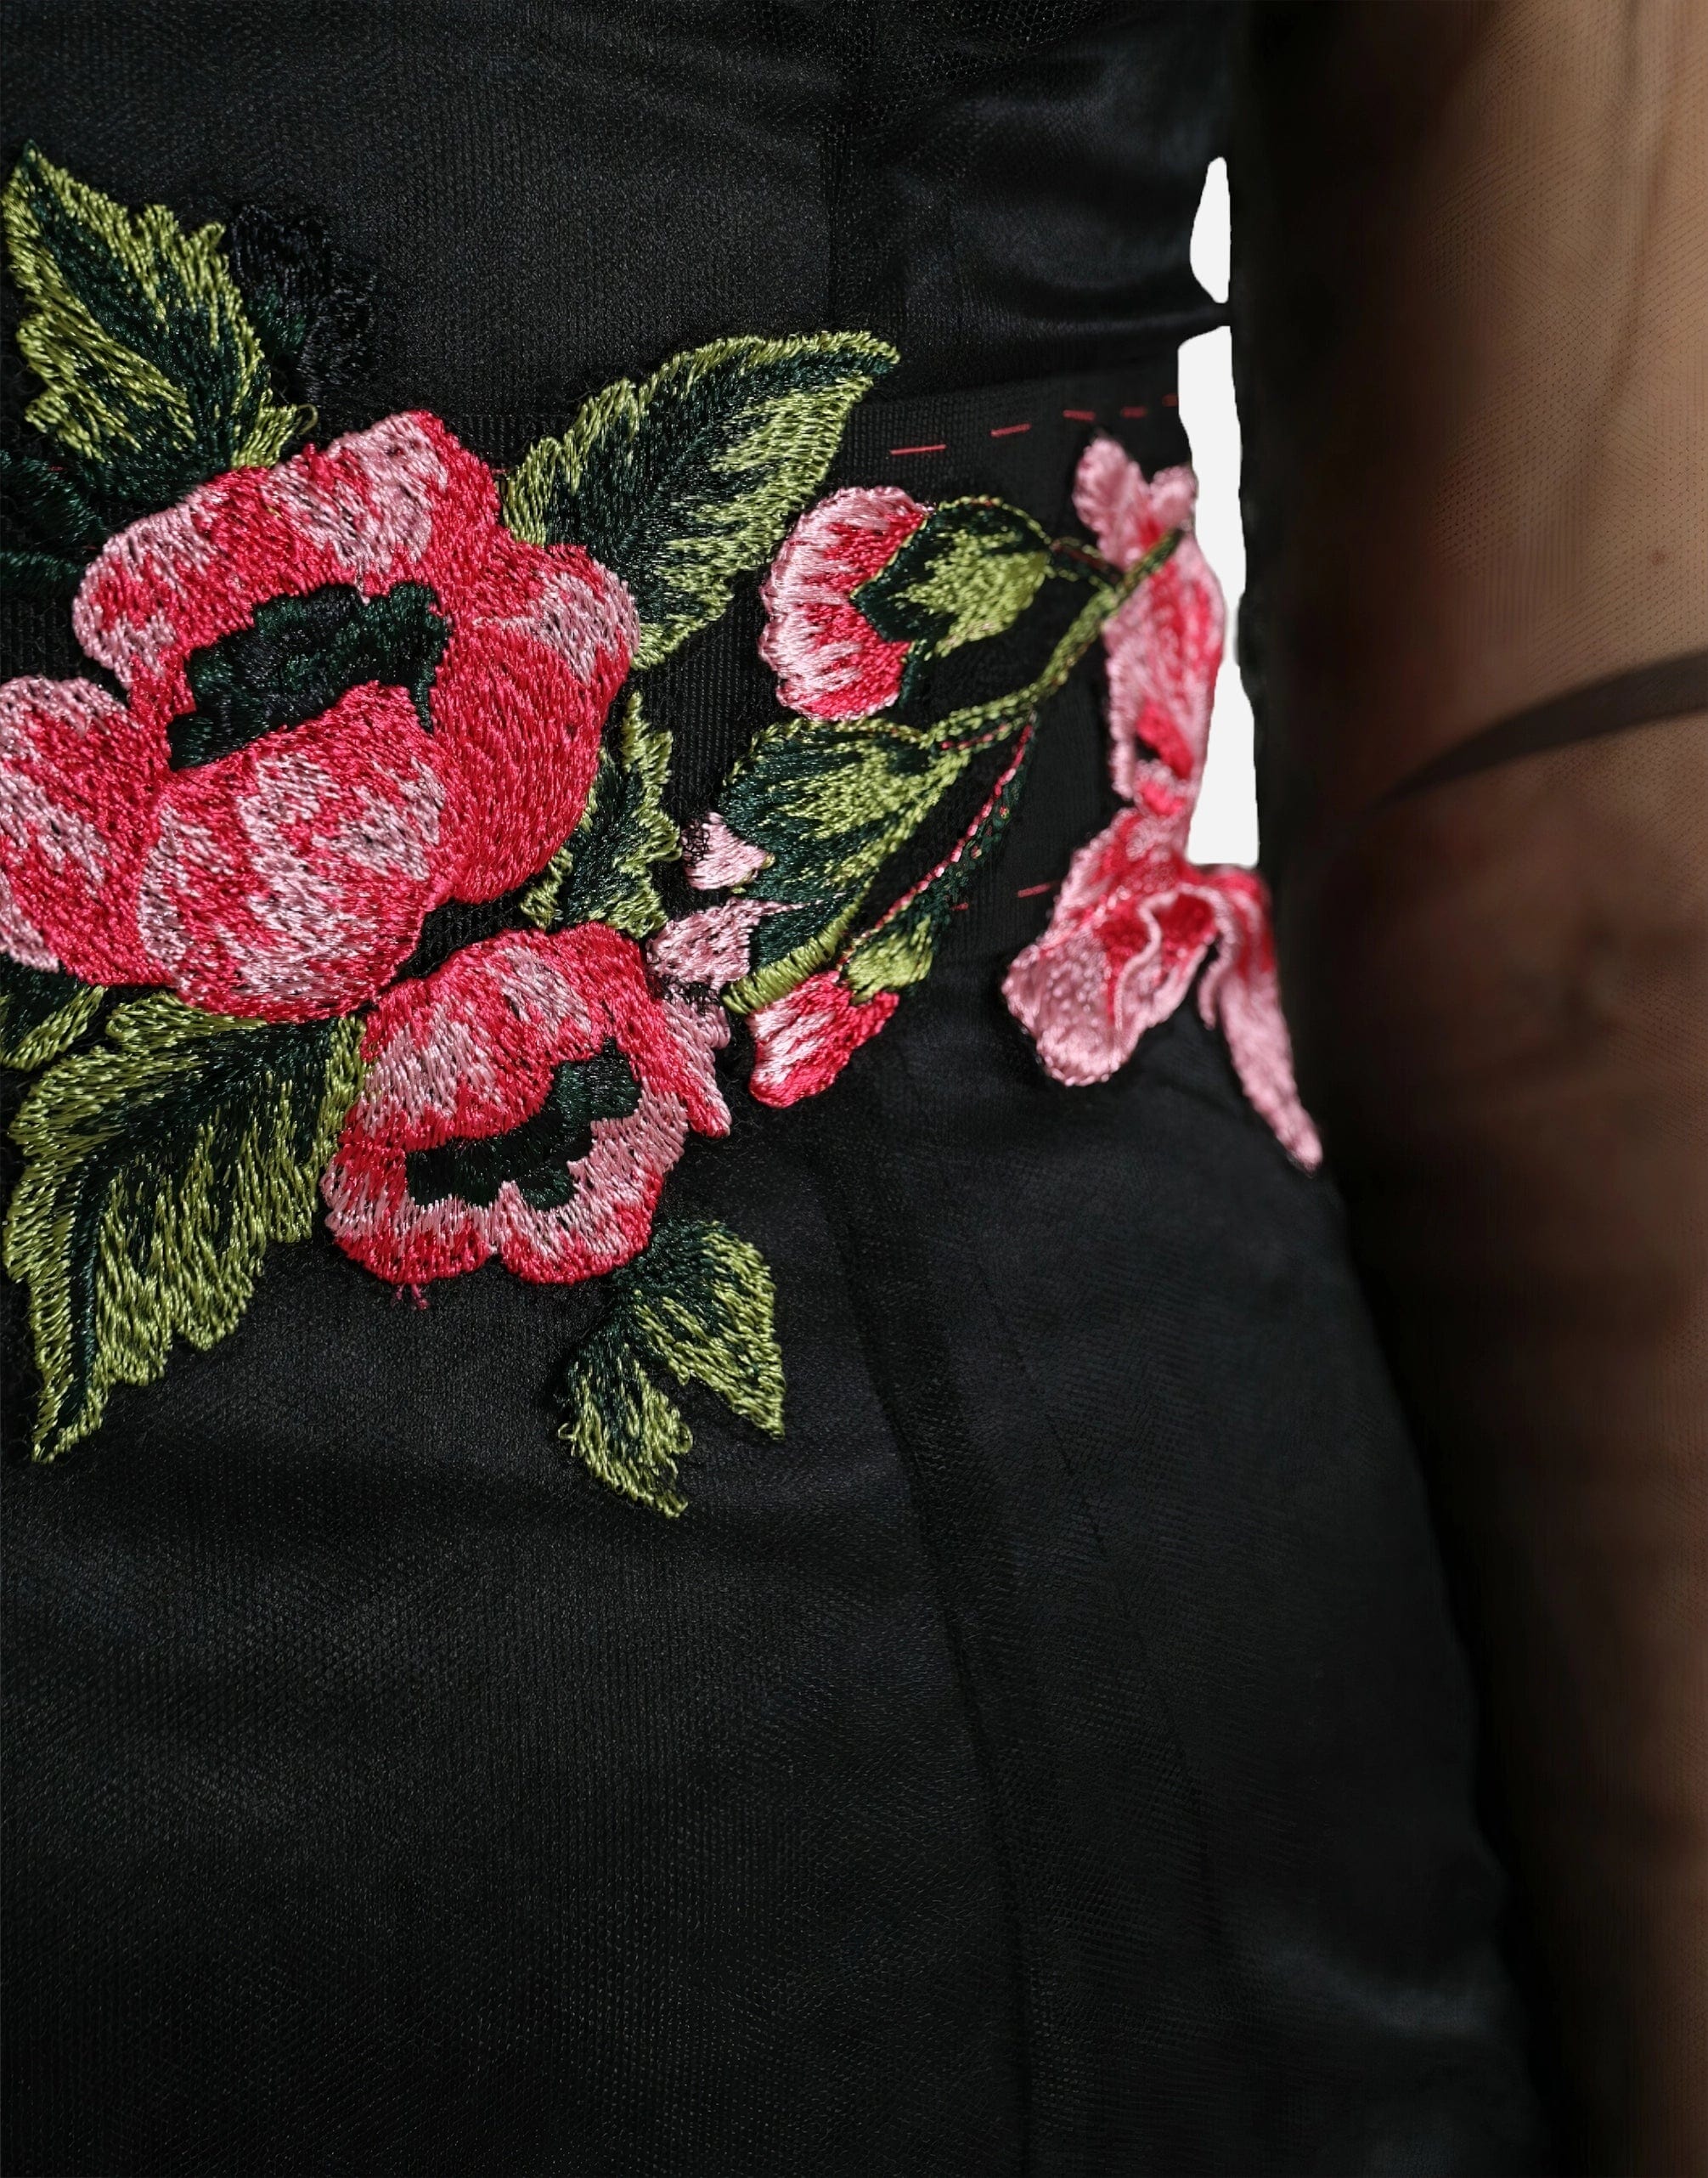 Dolce & Gabbana Mesh Floral Embellished Gown